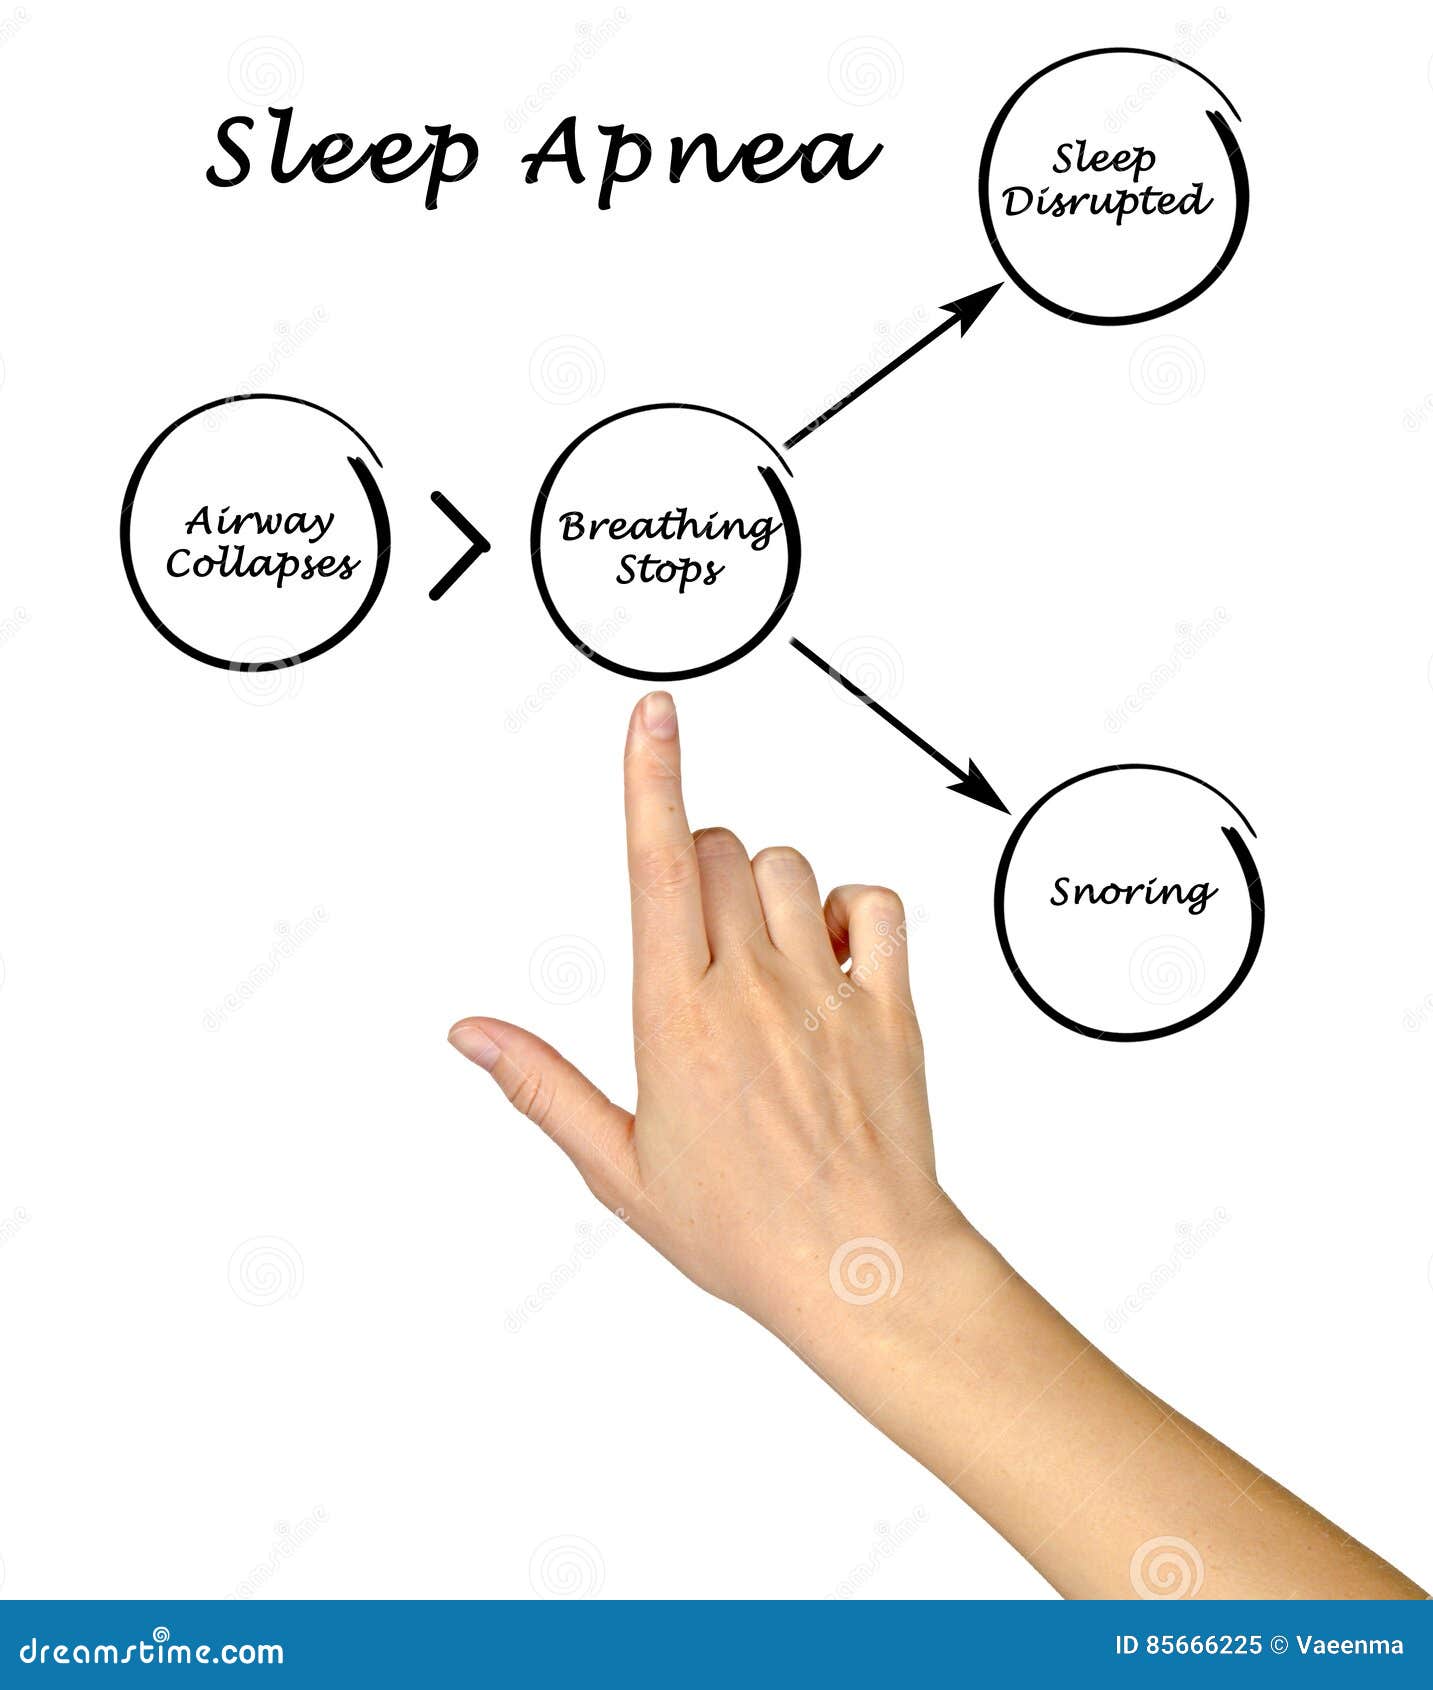 [DIAGRAM] Normal Sleep Diagram - MYDIAGRAM.ONLINE